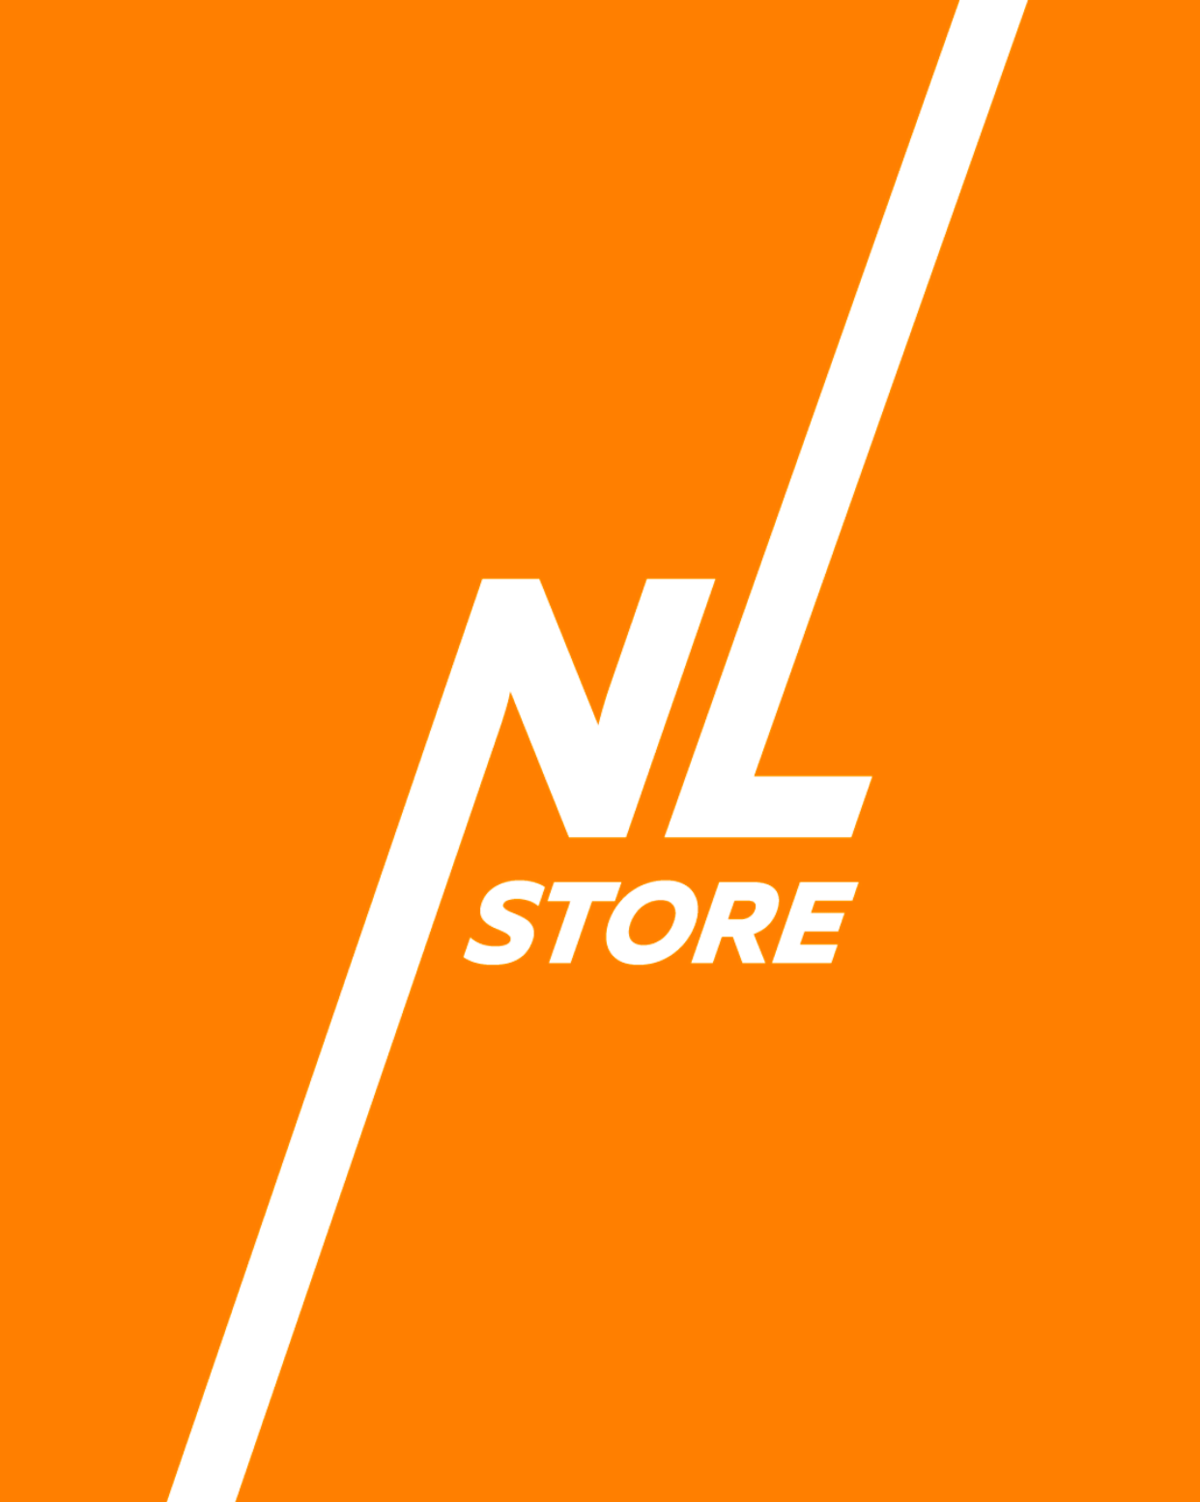 Нл. Nl. Логотип НЛ. Nl International. Nl Store.